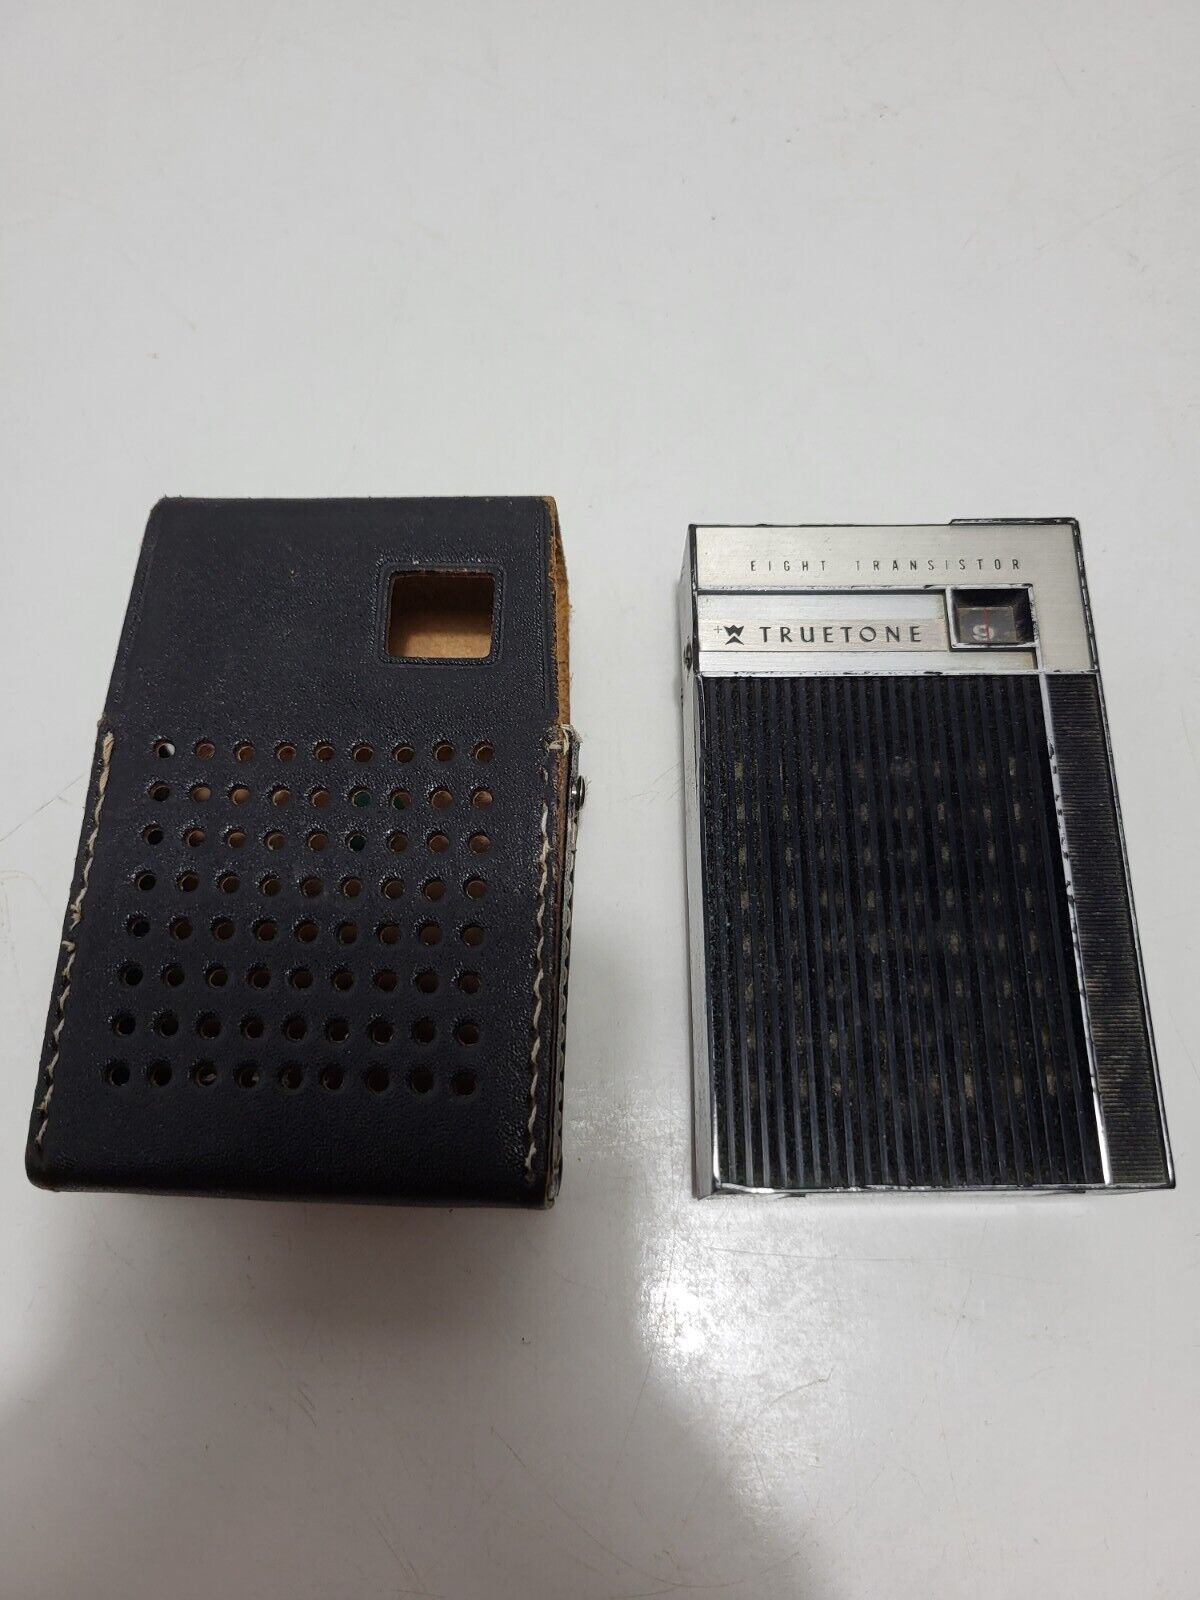 Vintage TRUETONE 8 Transistor Portable Radio With Leather Case.